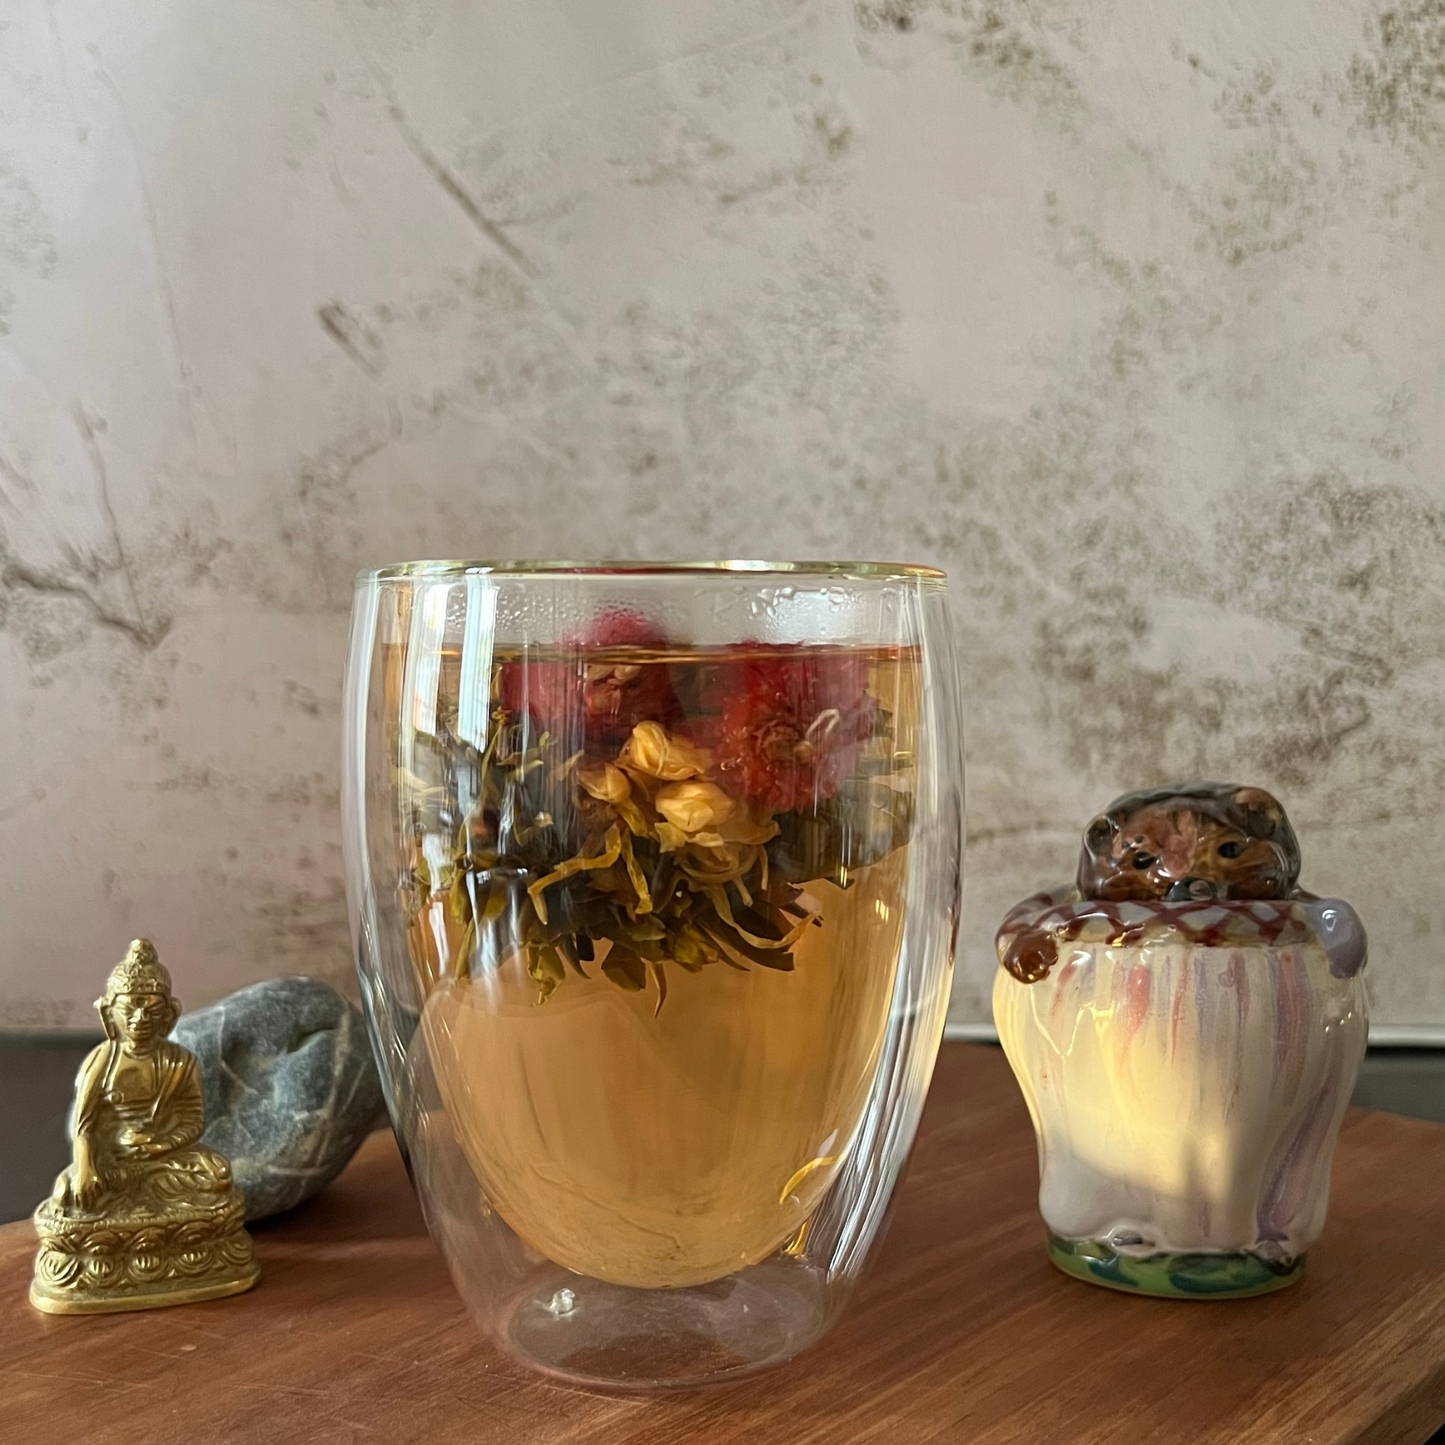 Buy Globe Amarnath Blooming Flower Tea Online : Chai Experience